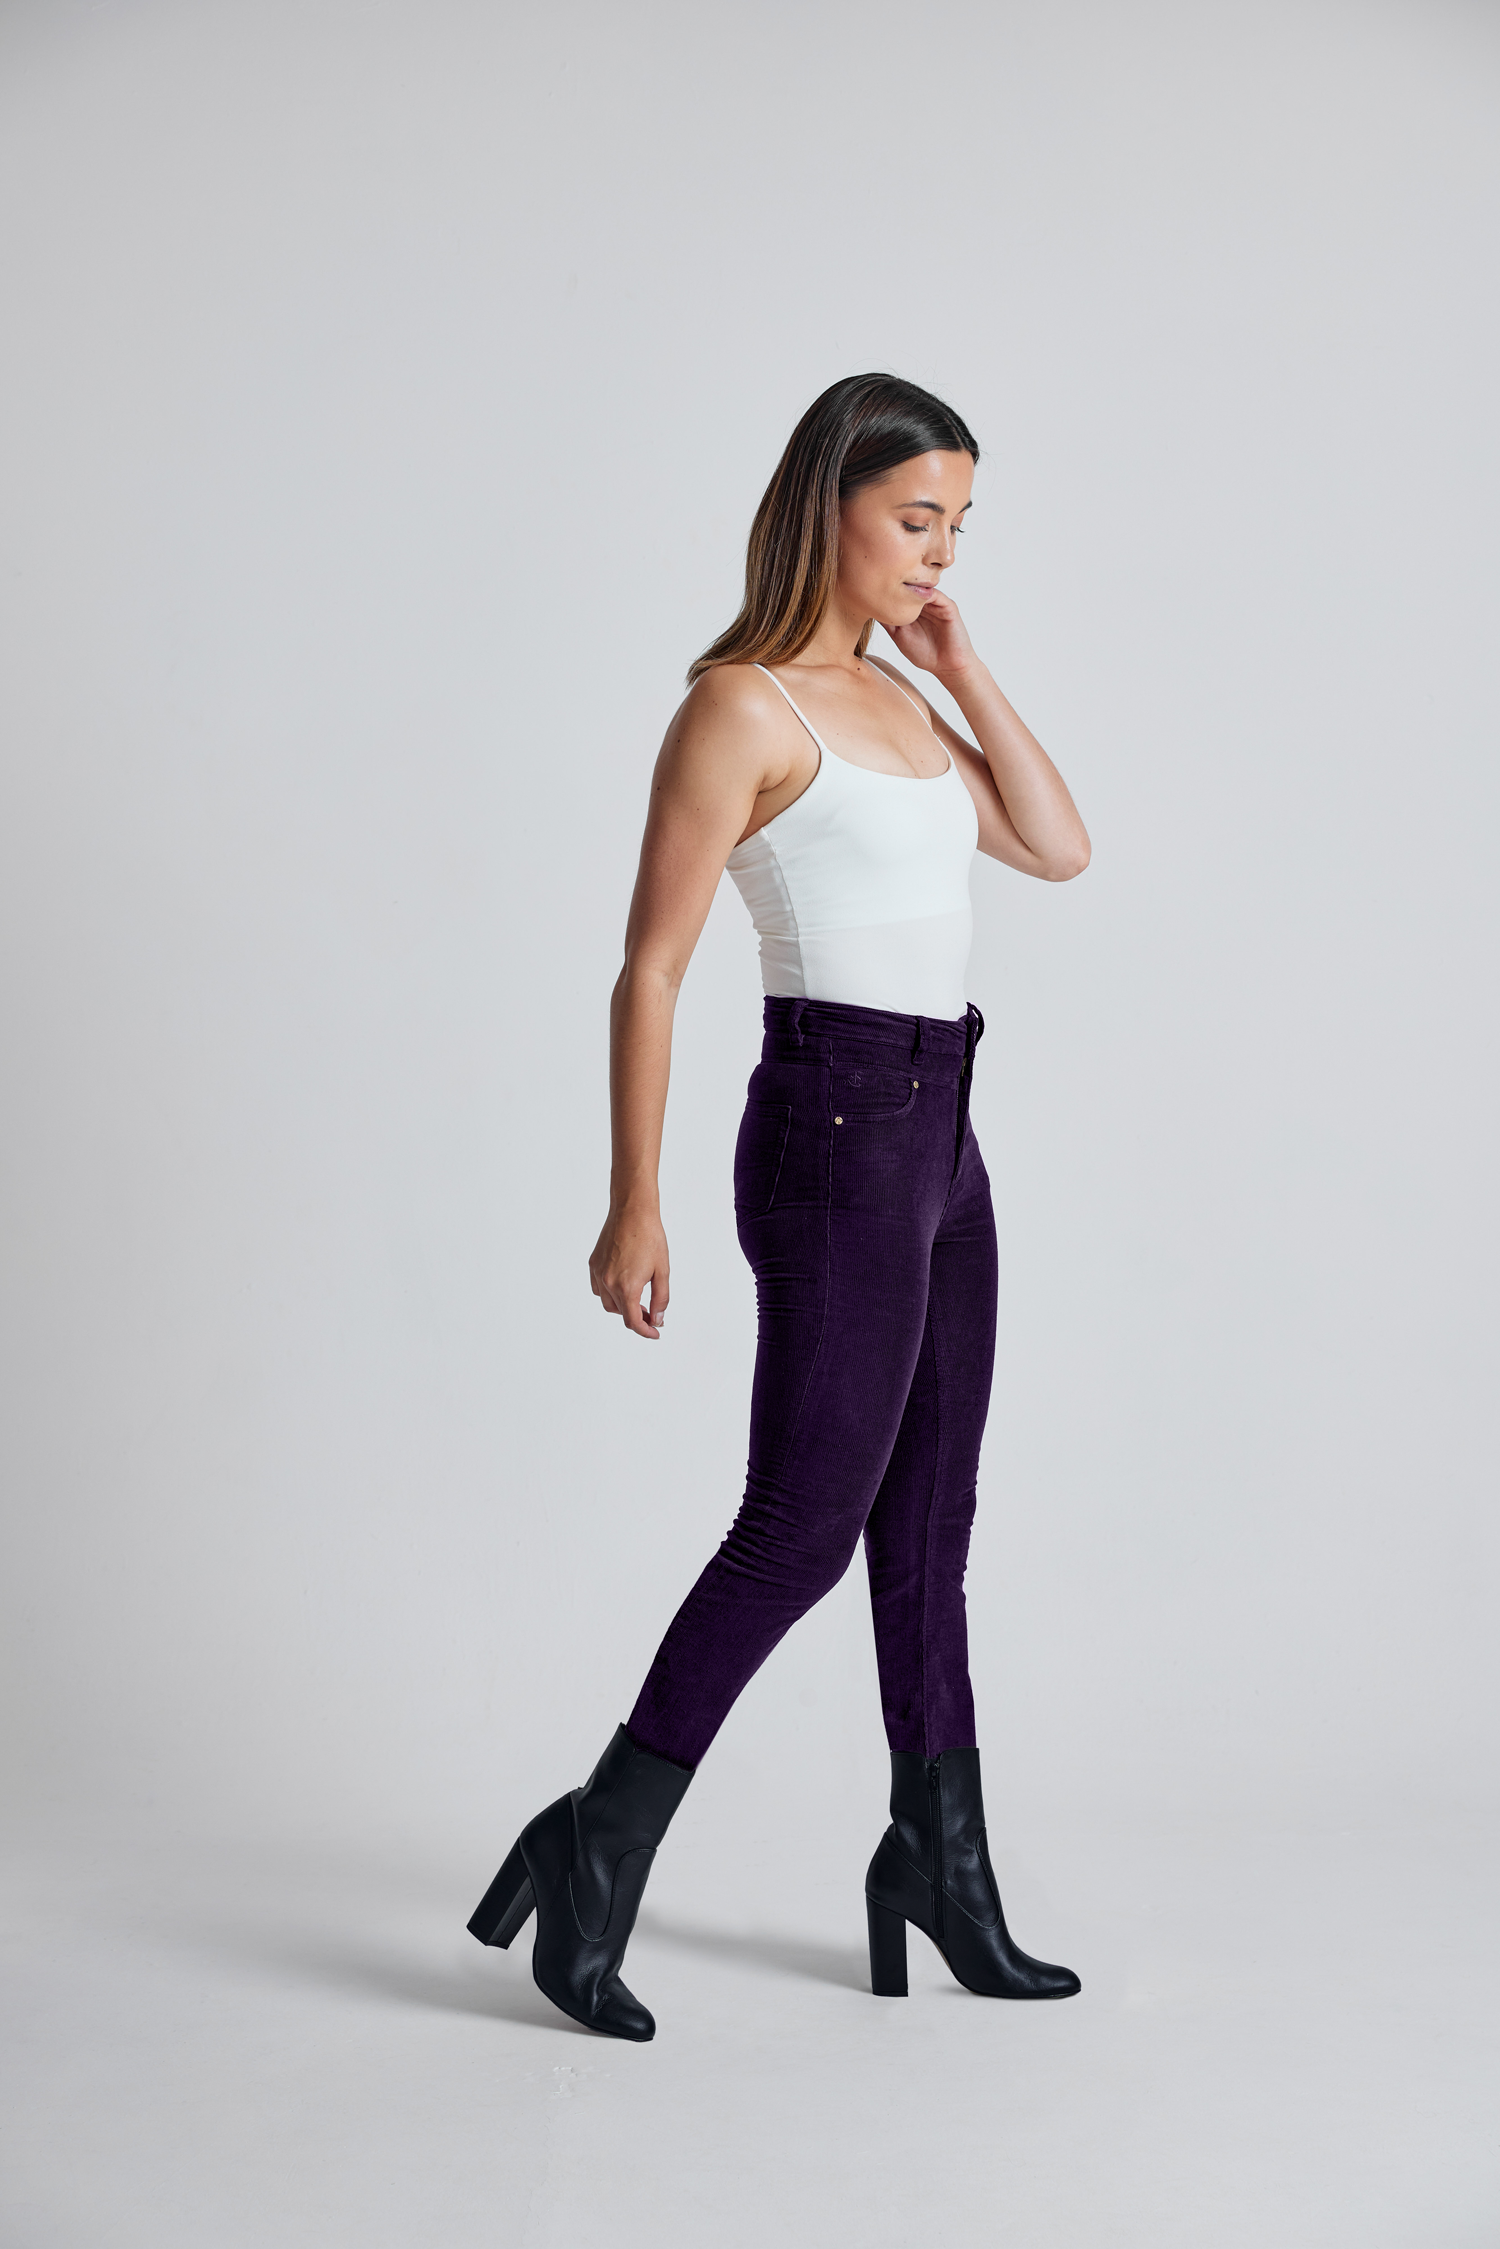 NINA Aubergine - Organic Cotton Cord High Waist Skinny Jean by Flax & Loom